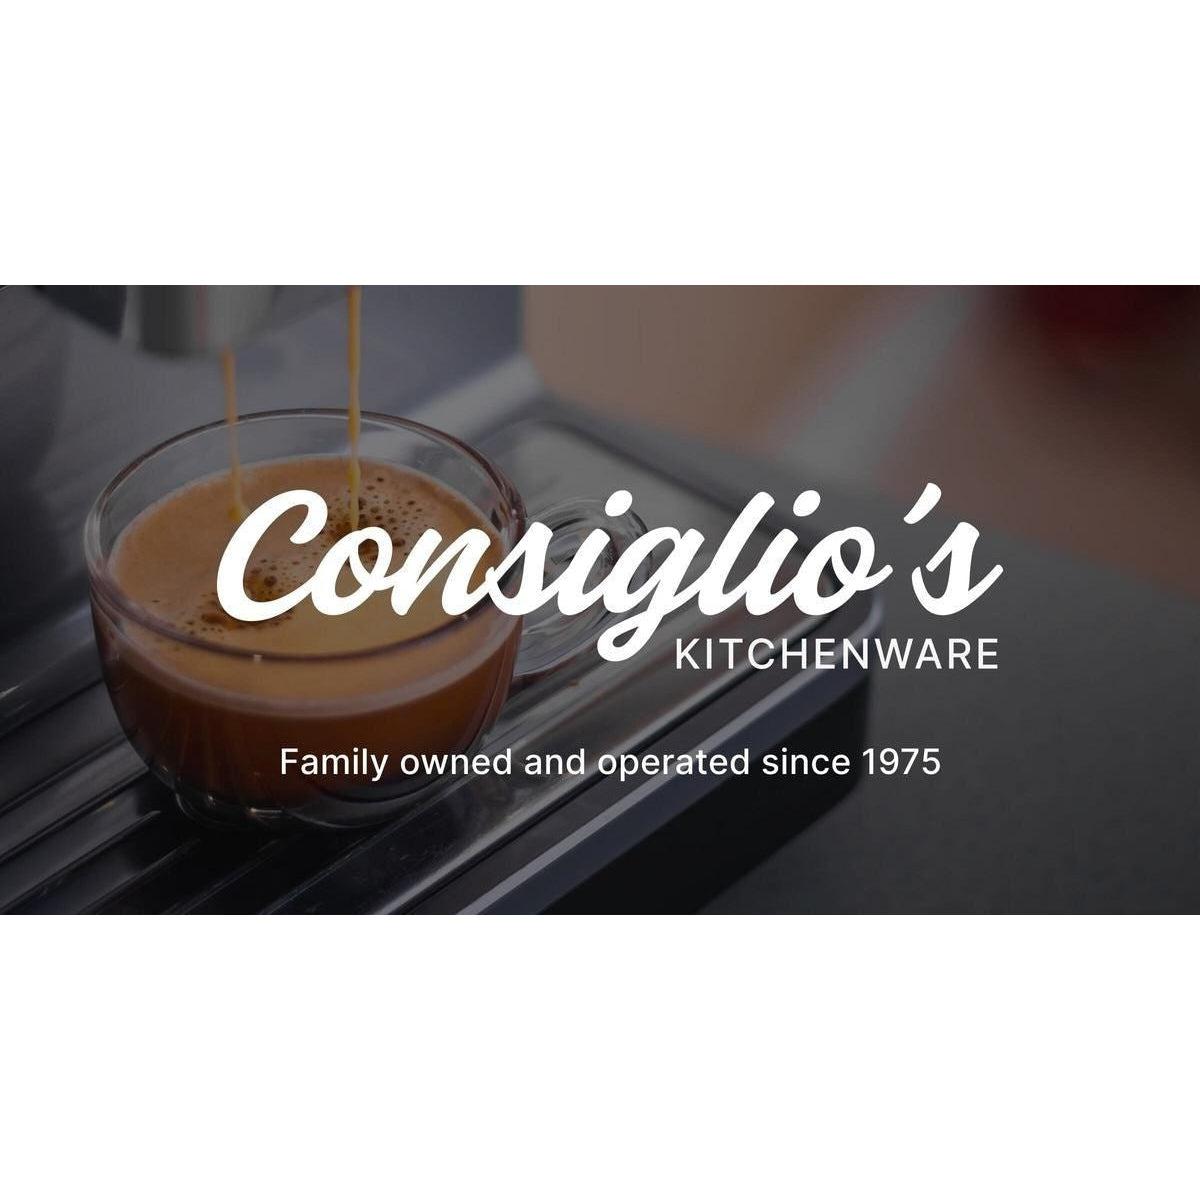 Consiglio's Kitchenware FamilyRan Since 1975